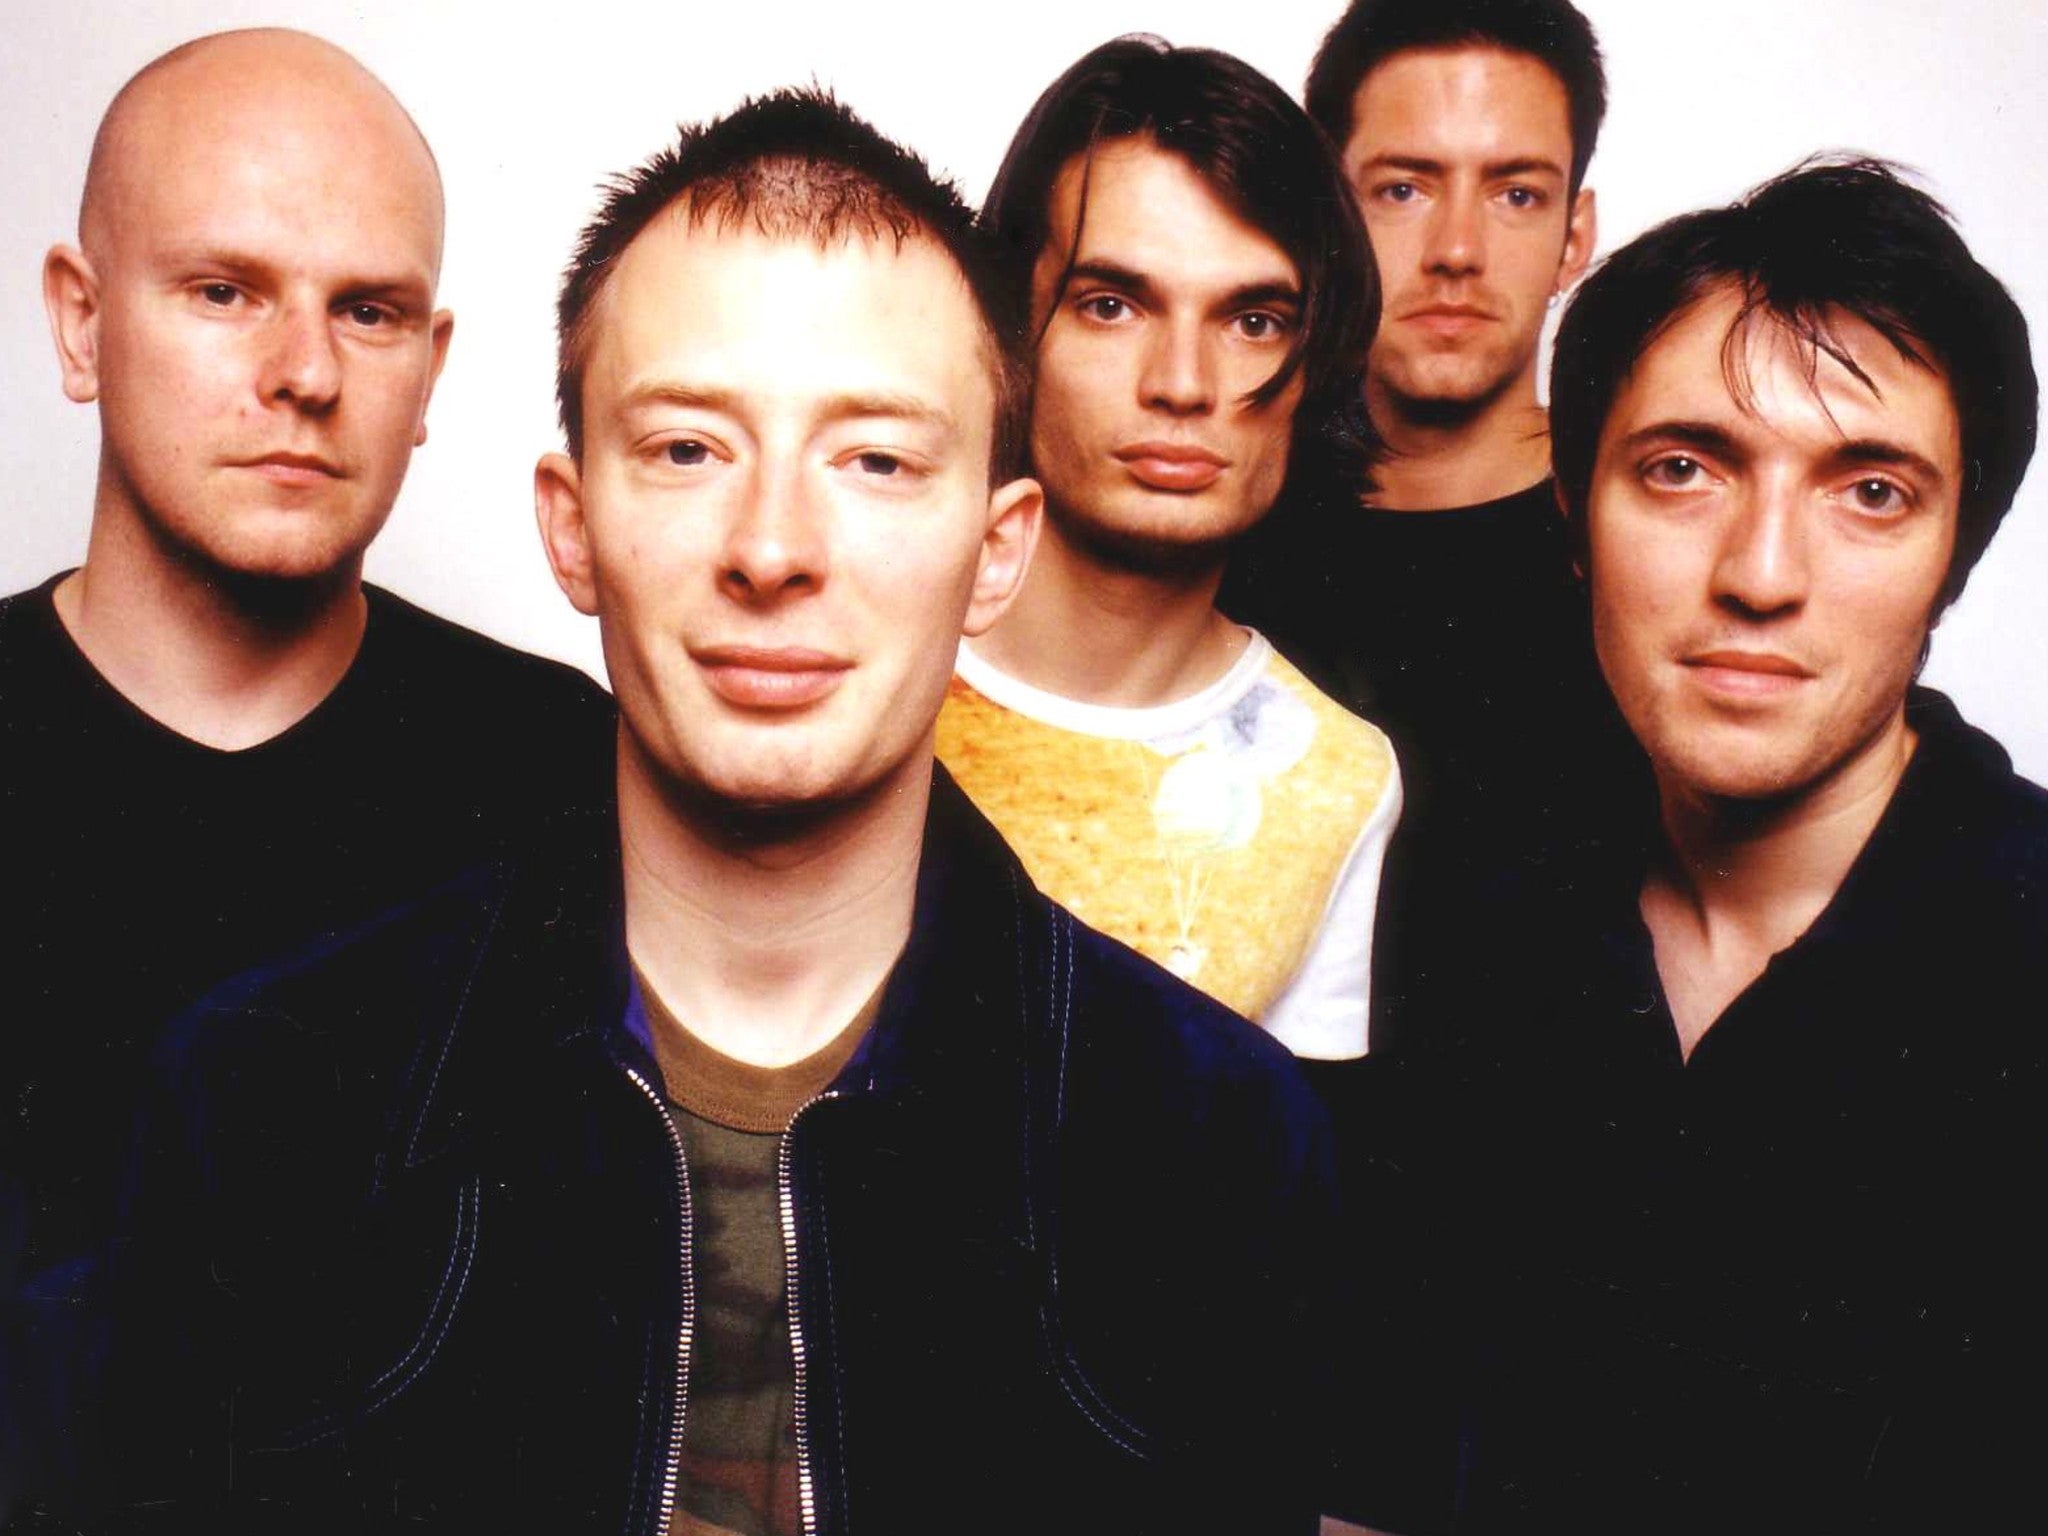 Radiohead in 1997